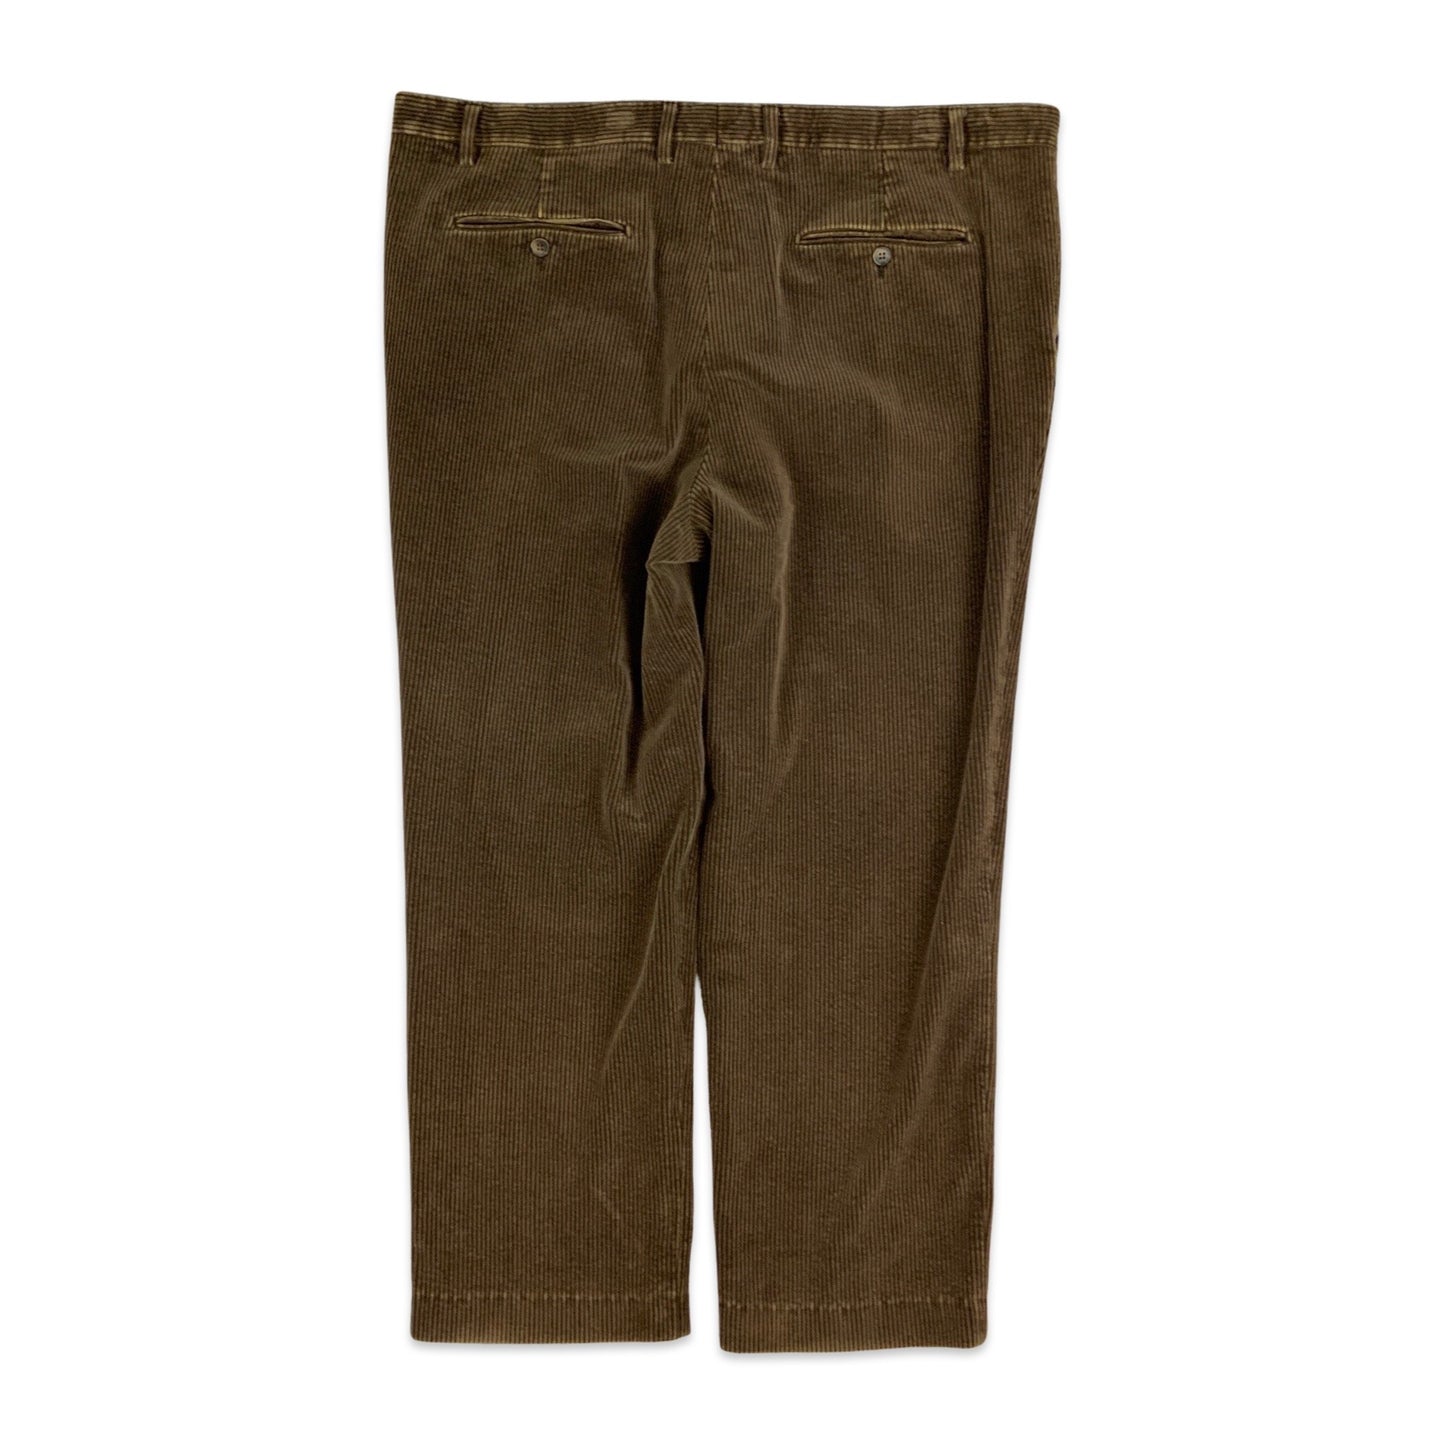 Vintage Brown Cord Trousers 43W 28L